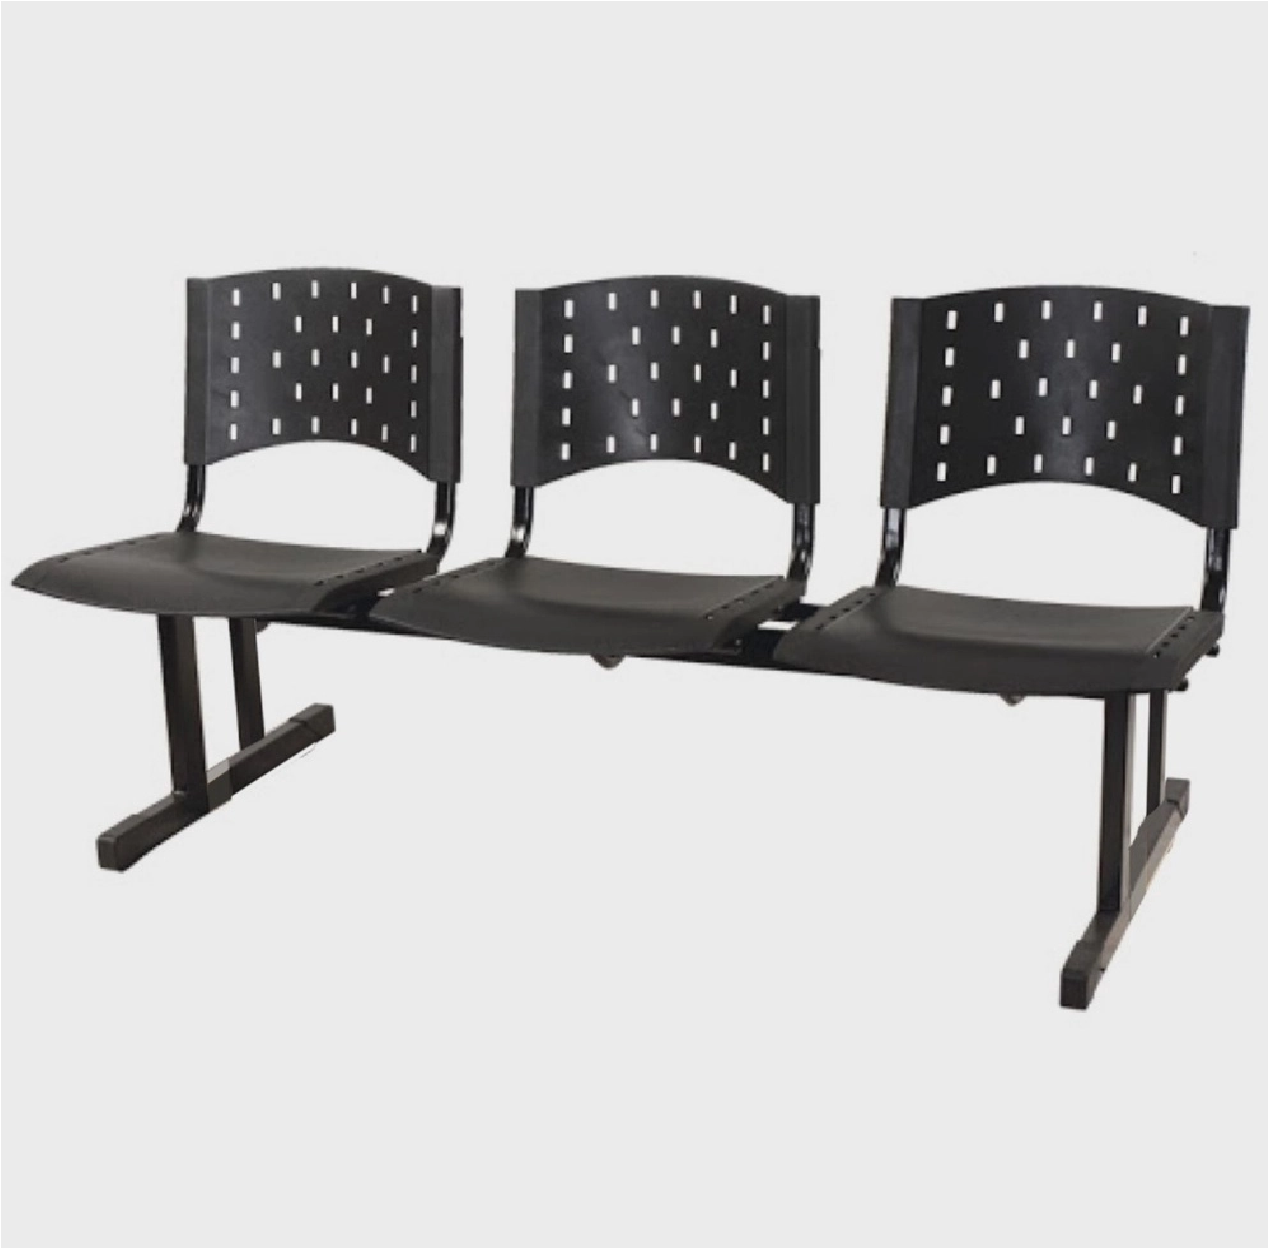 Cadeira Longarina plástica 03 Lugares - Cor preta - realplast - 1